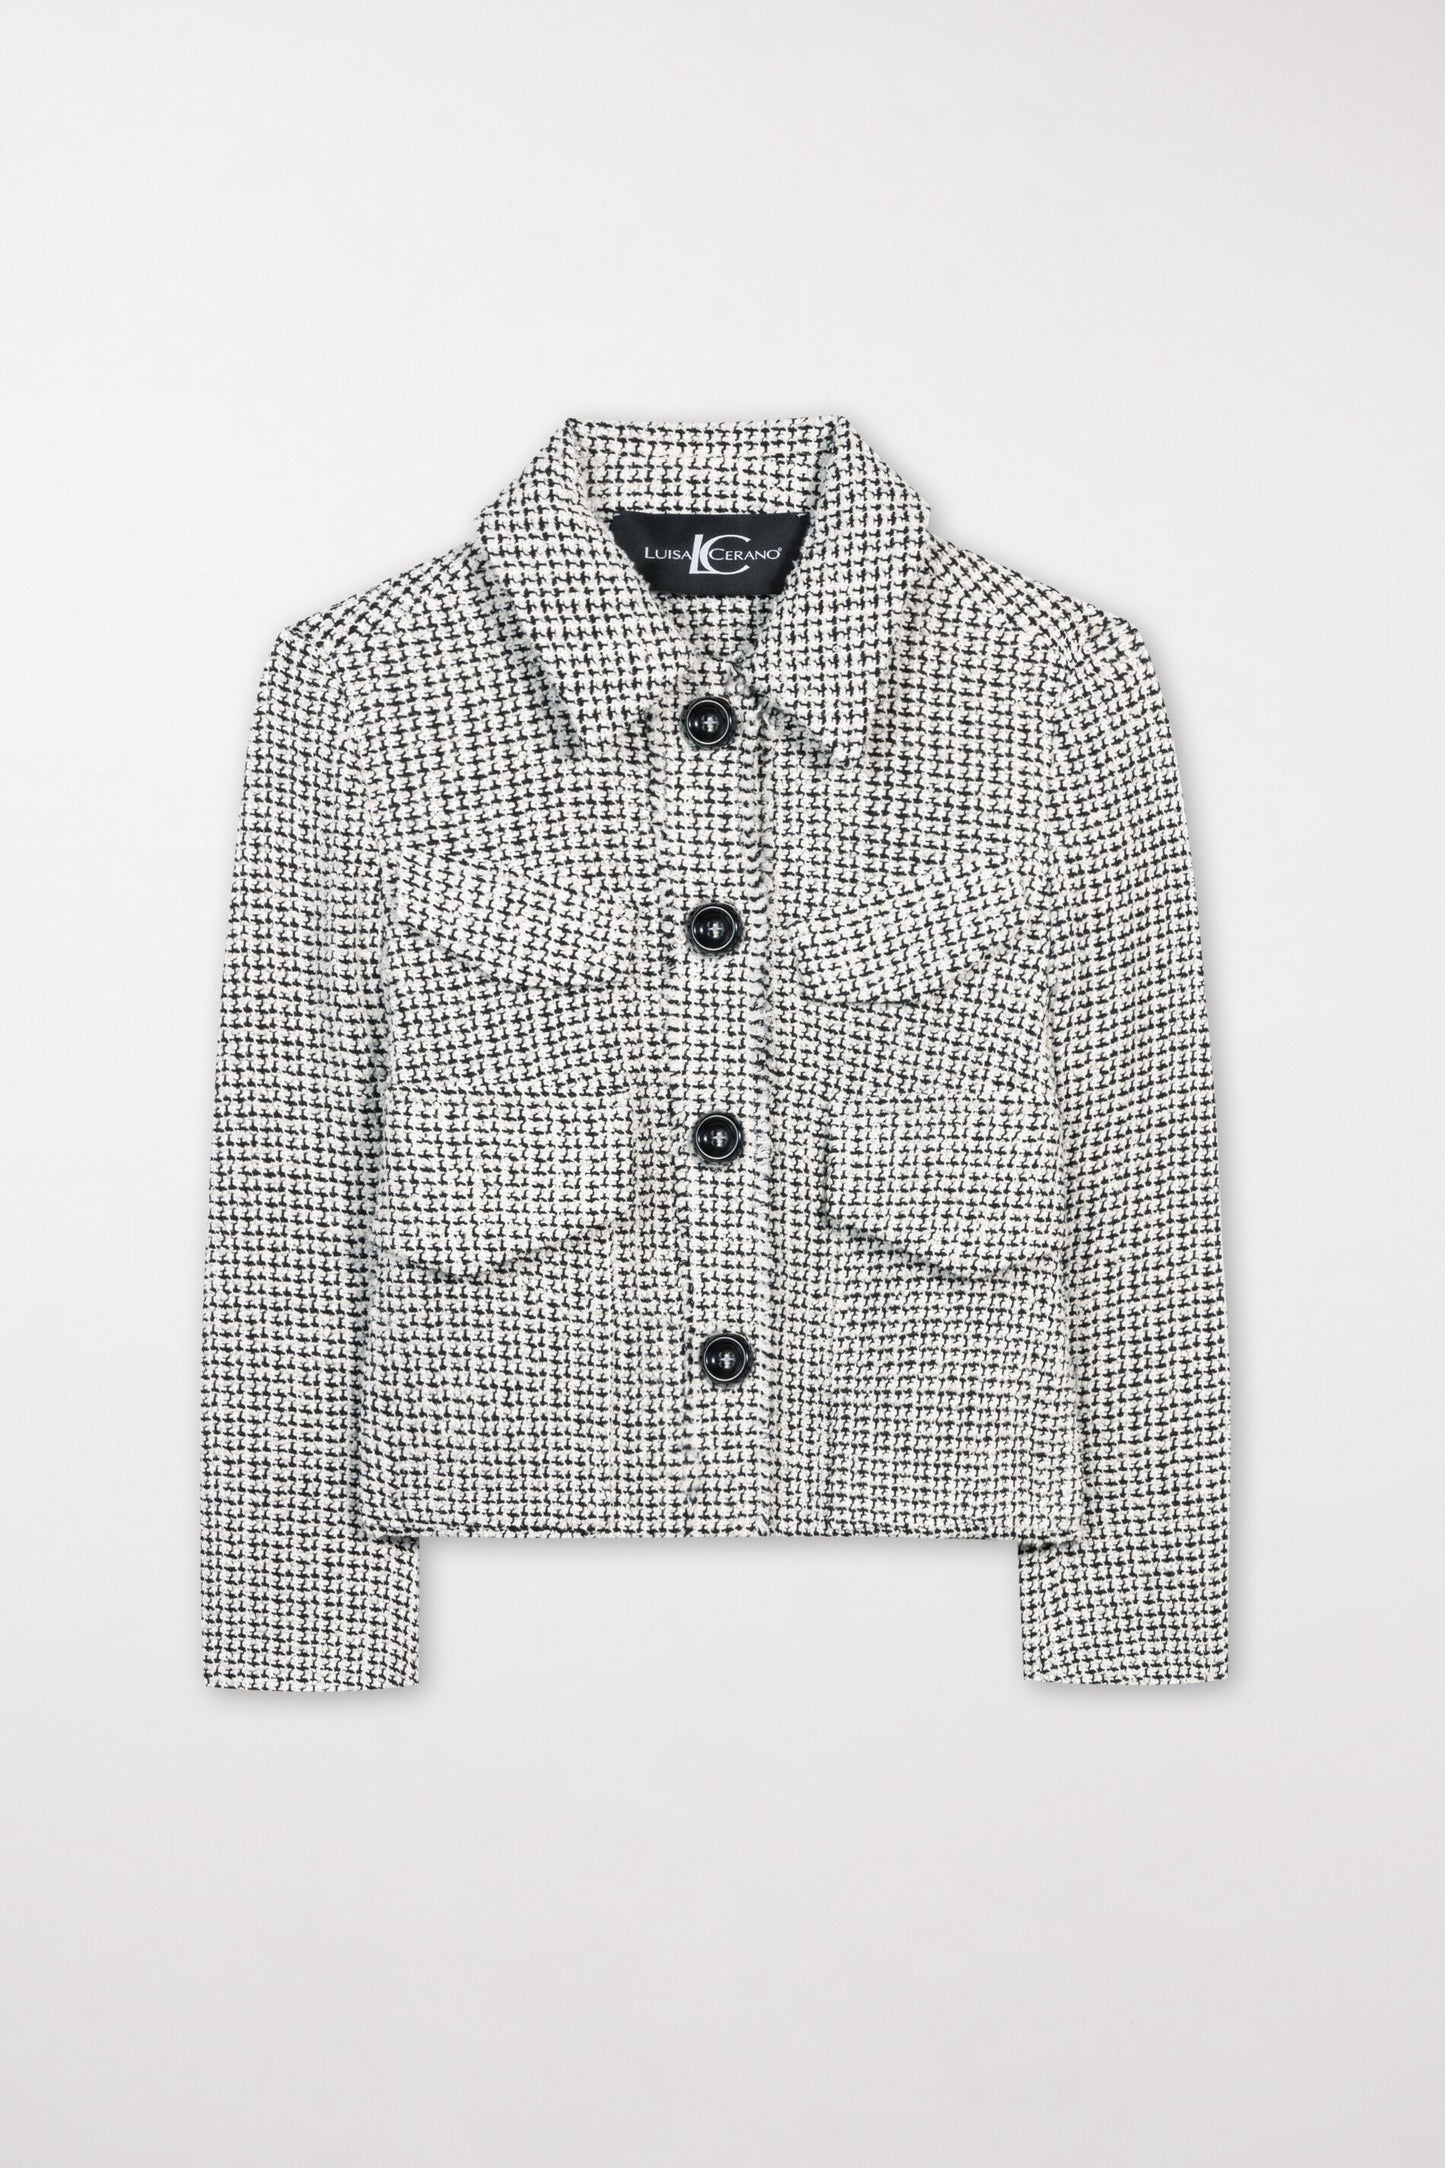 Tweed-Style Jacket